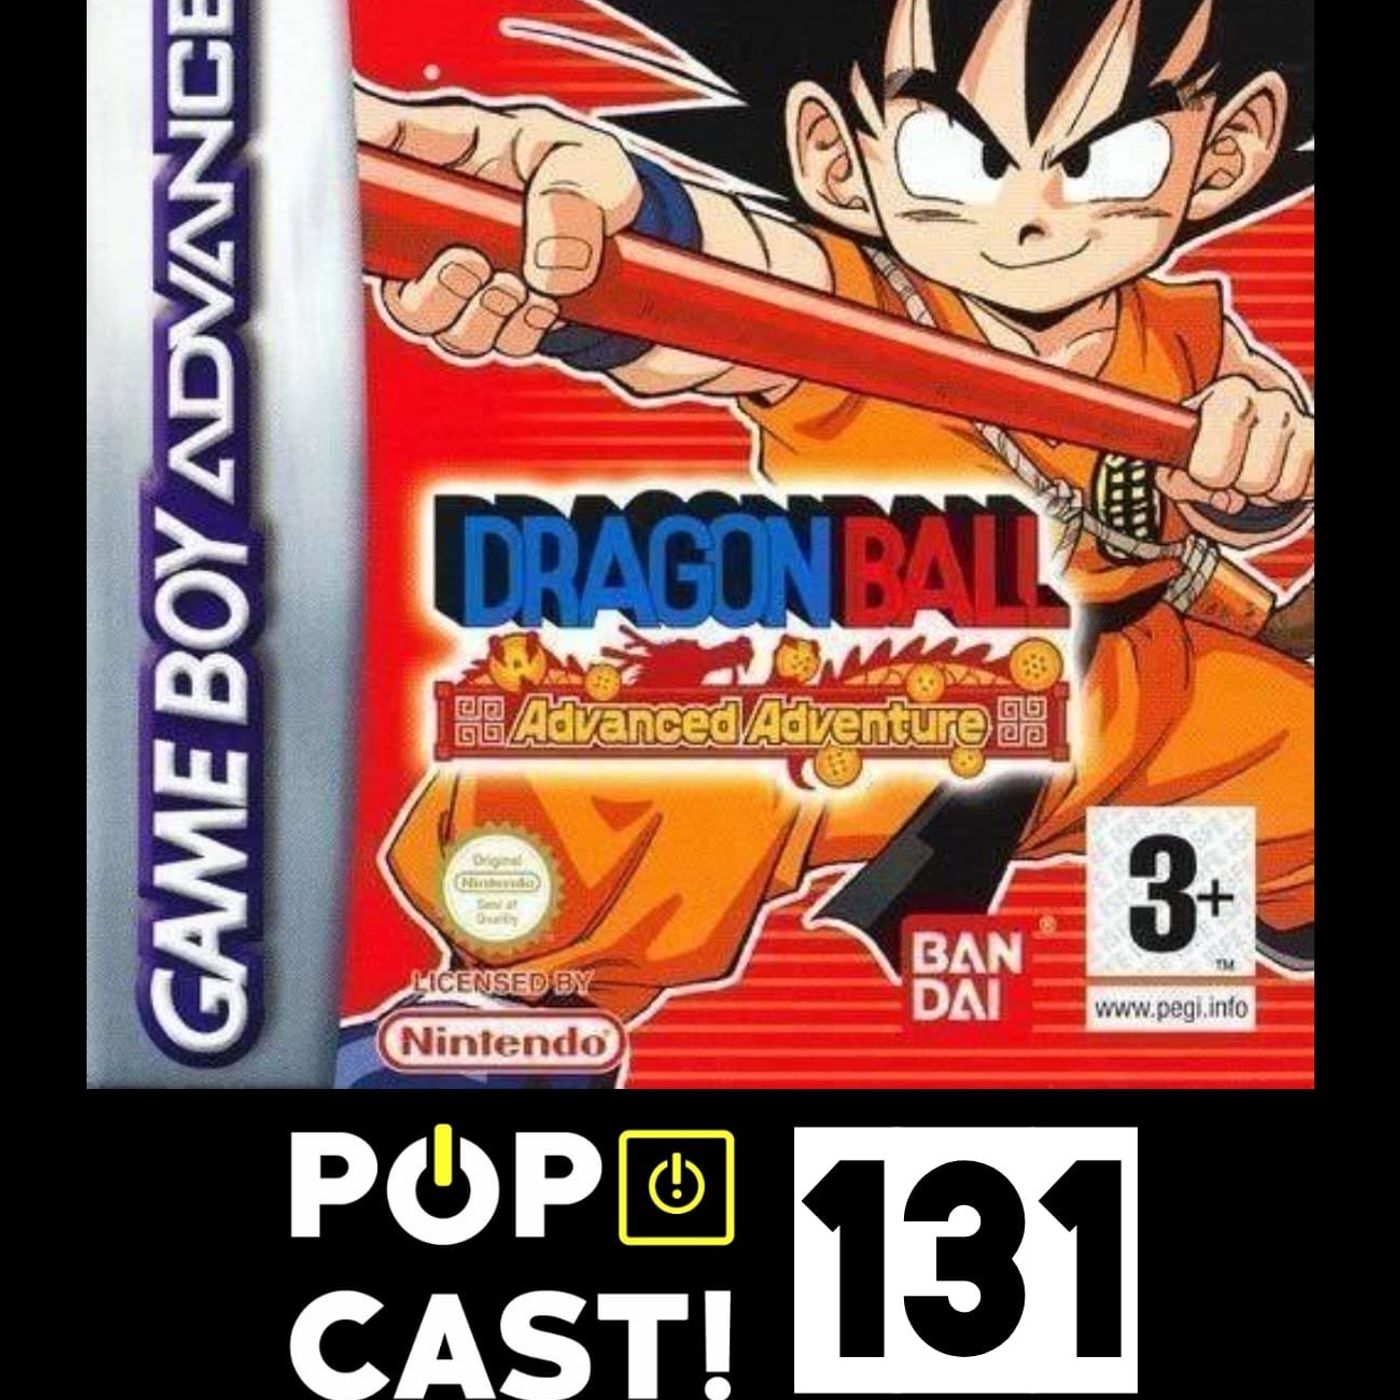 Pópcast! #131 - Dragon Ball: Advanced Adventure